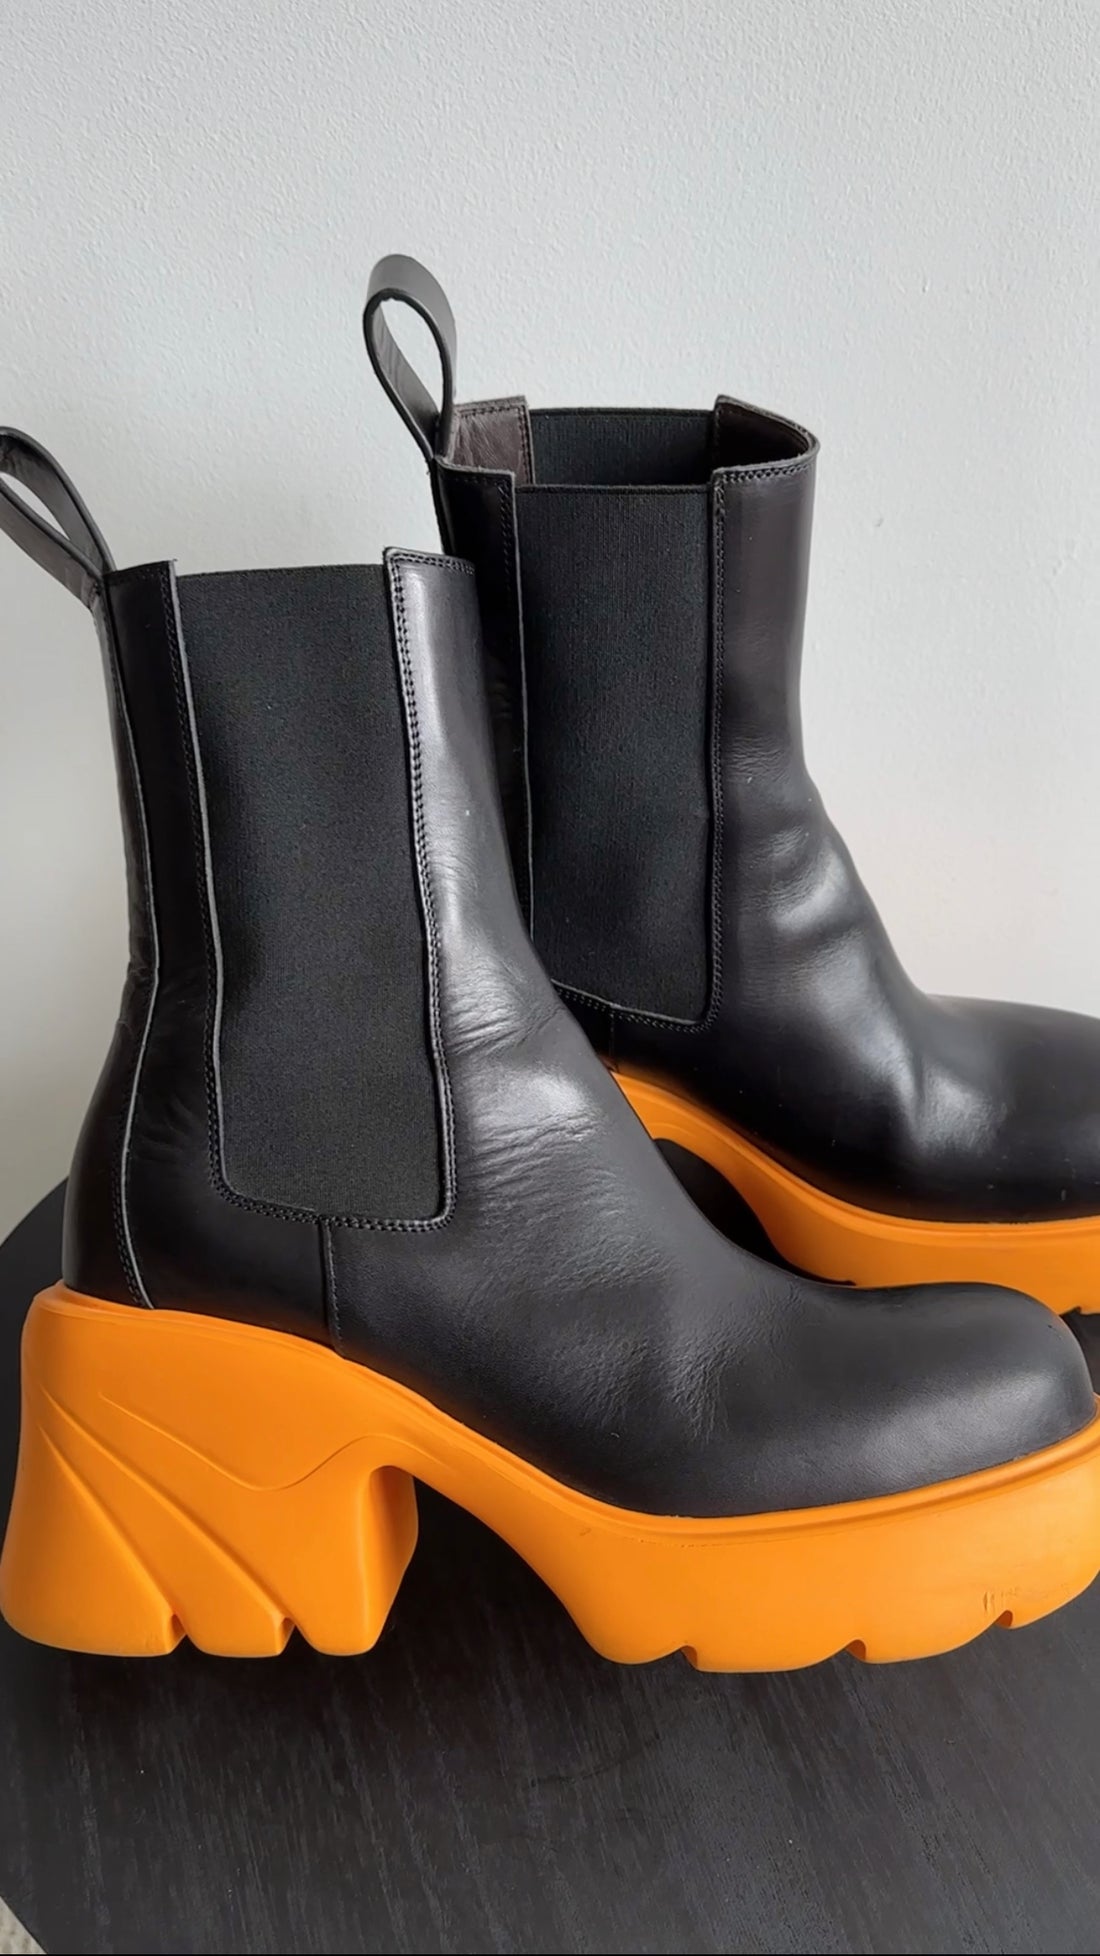 Bottega Veneta Black Leather and Orange Rubber Flash Boots - 40